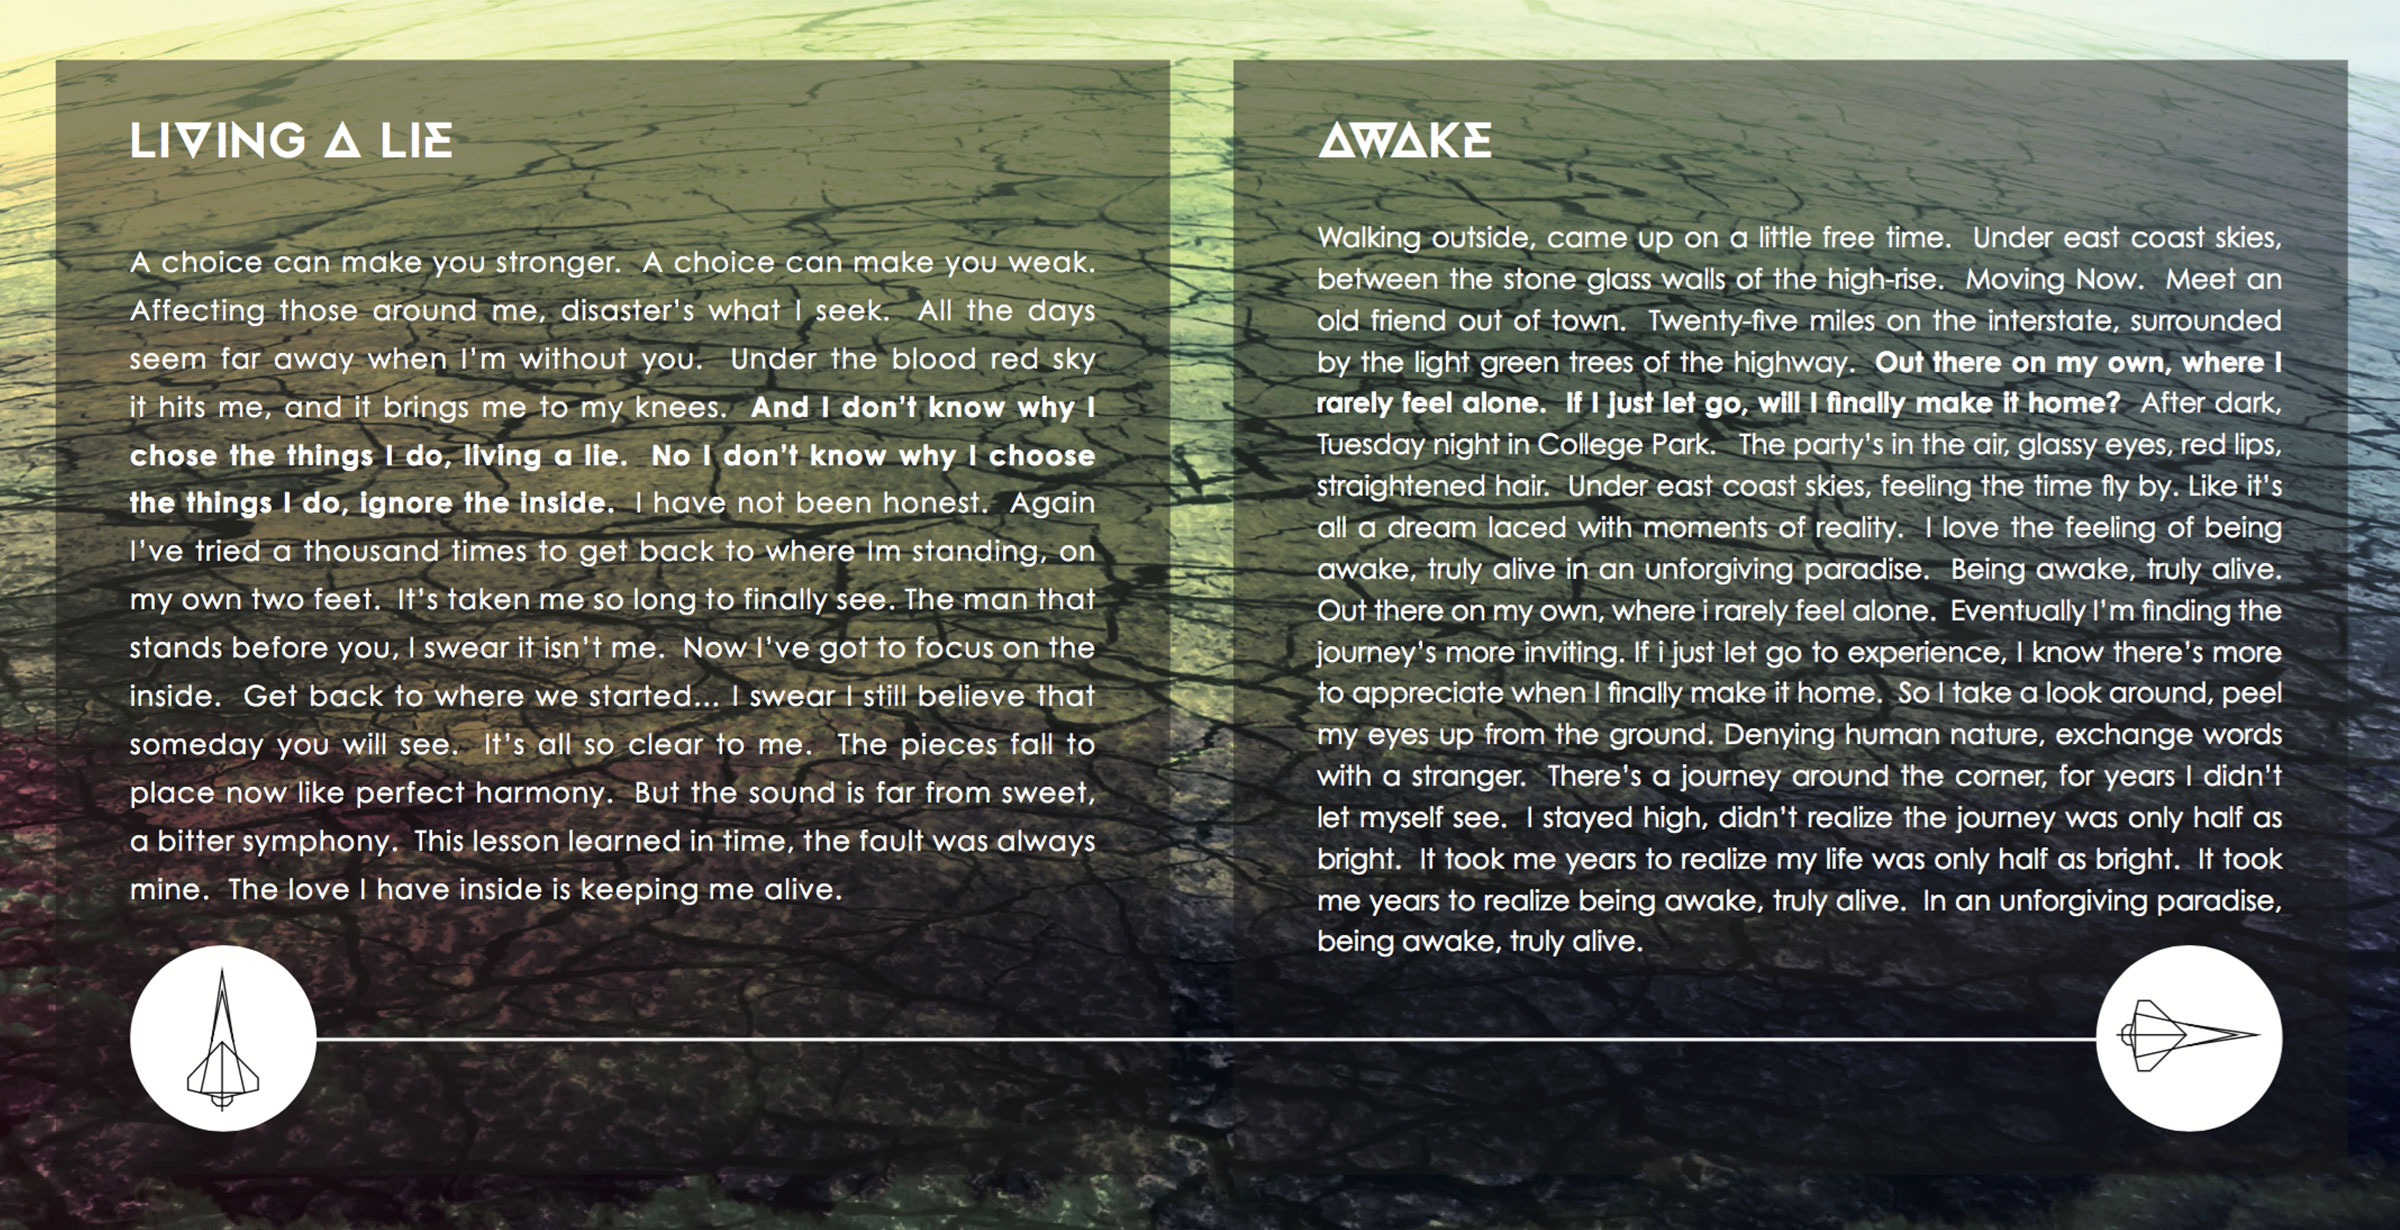 awake-ep-booklet-spread03